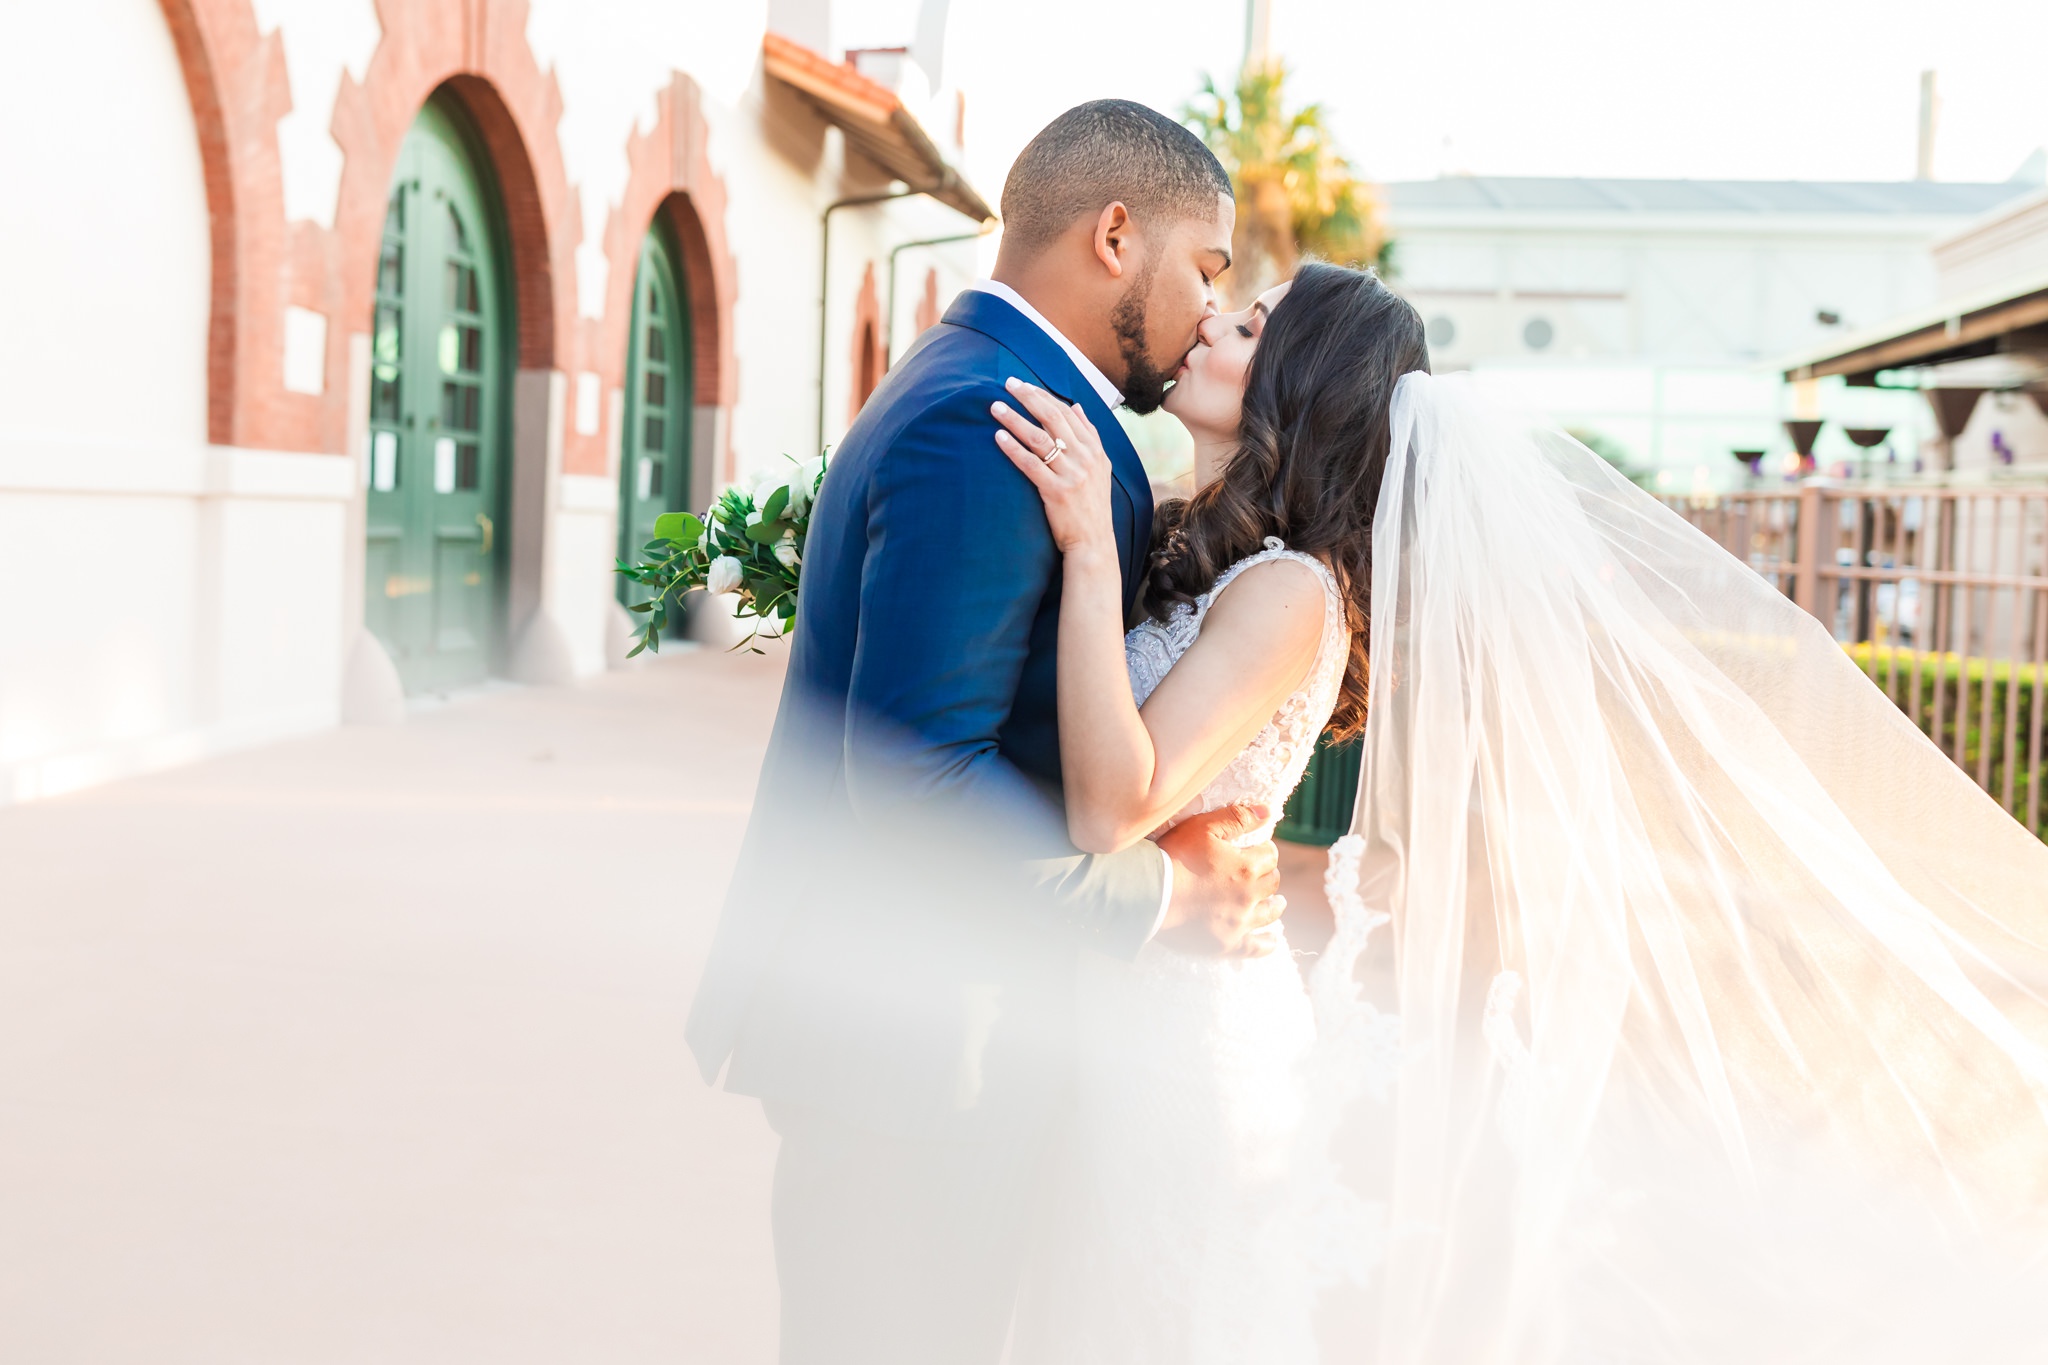 An Elegant and High Energy Wedding at Sunset Station in San Antonio, TX by Dawn Elizabeth Studios, San Antonio Wedding Photographer